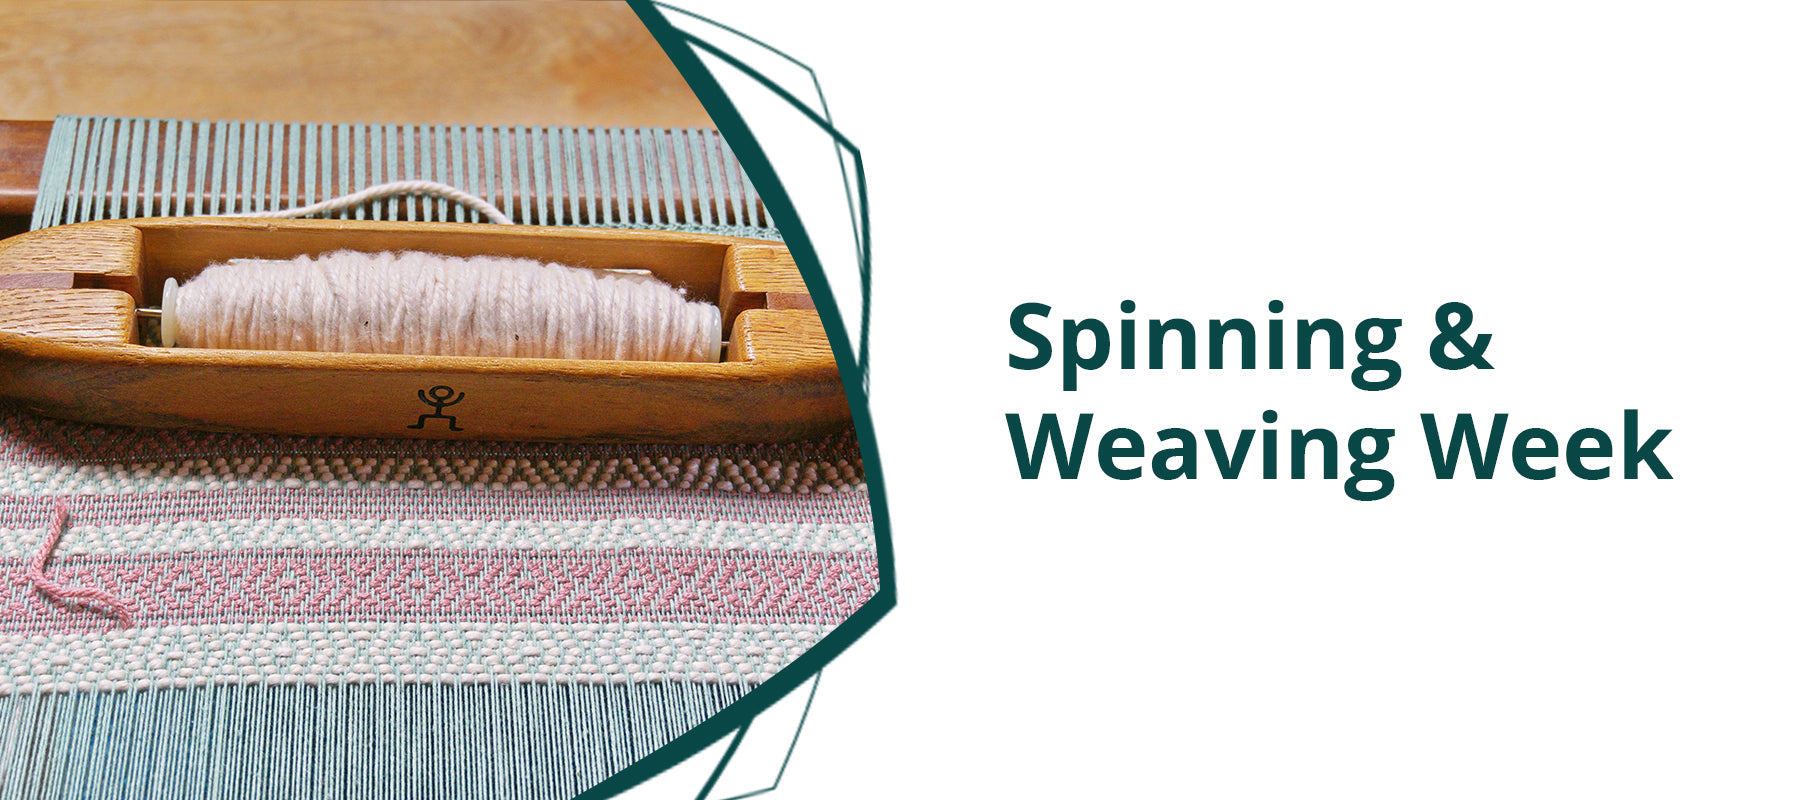 Spinning & Weaving Week